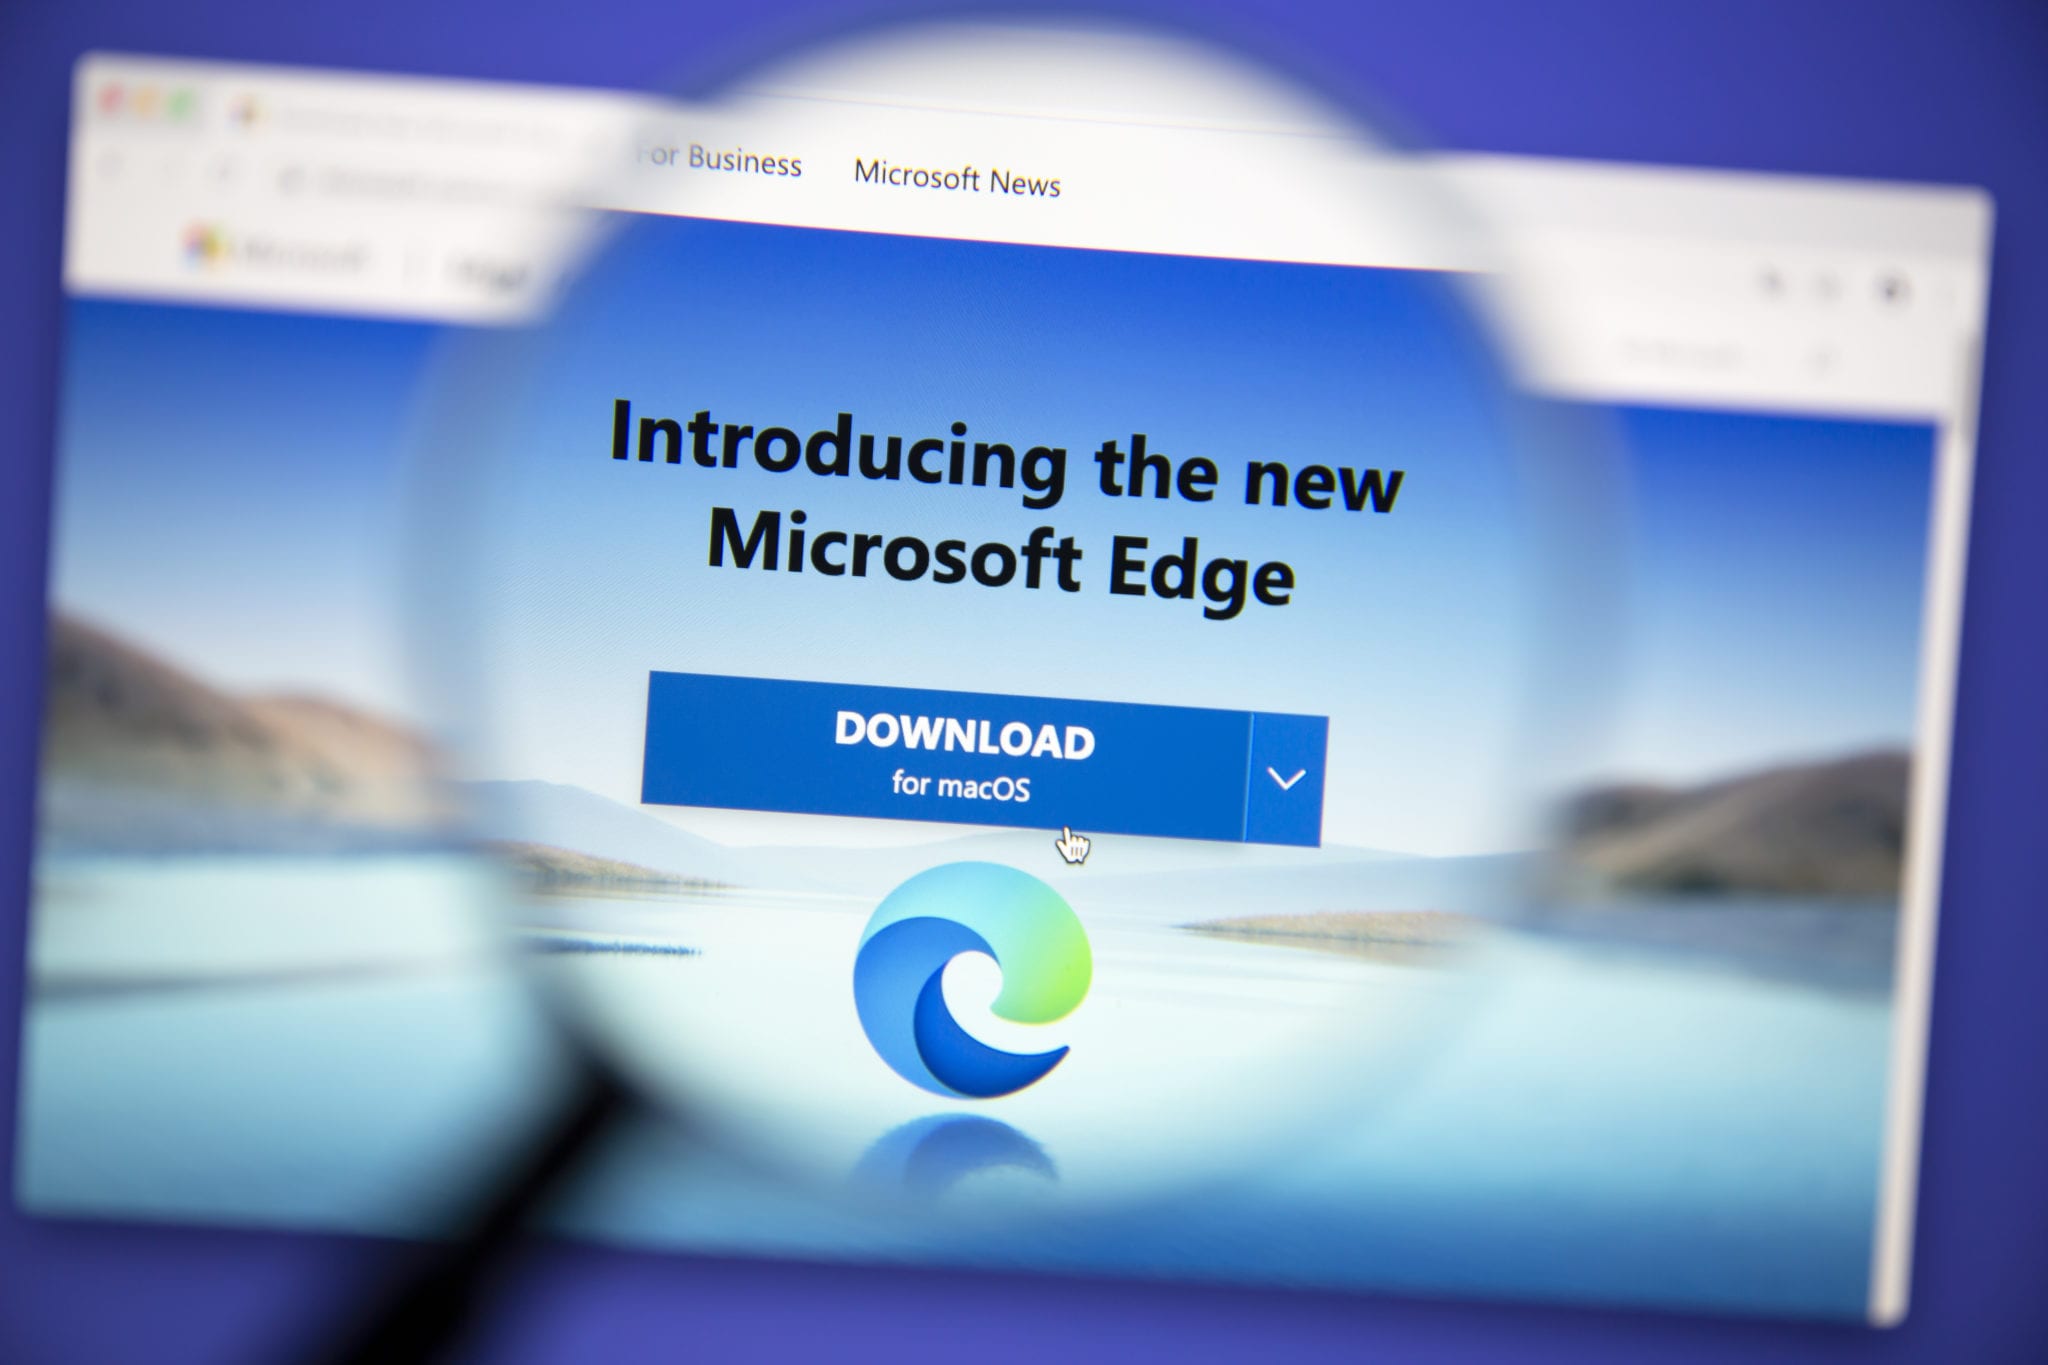 Microsoft Edge homepage on a computer screen